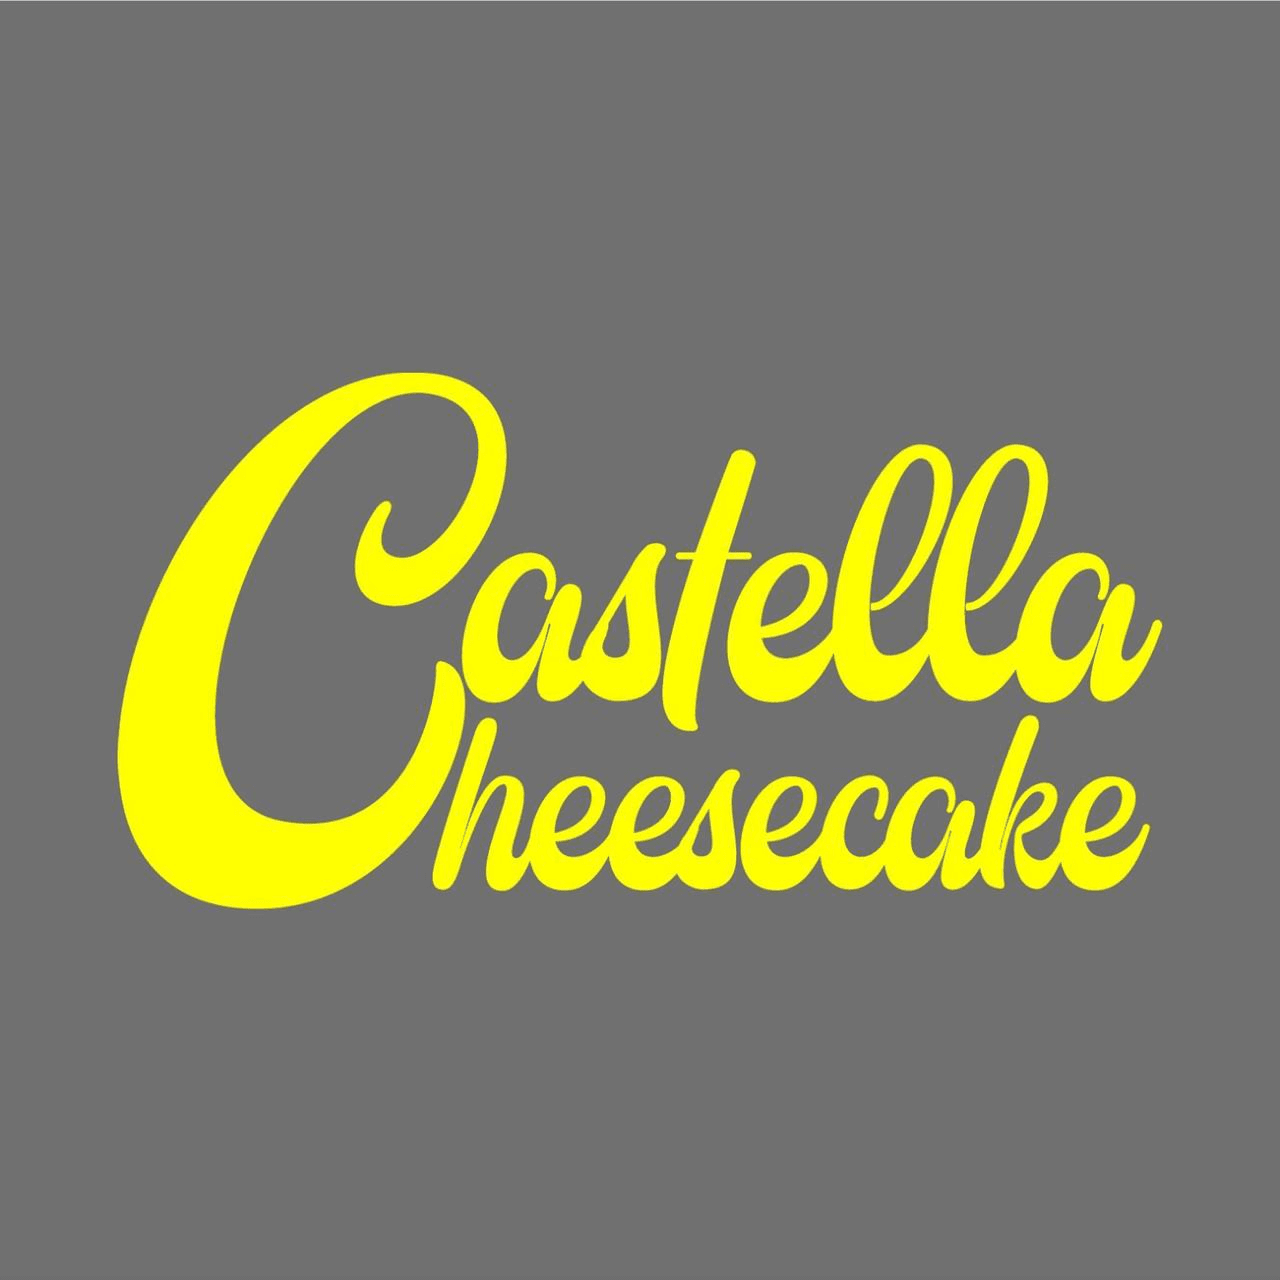 Castella Cheese Cake